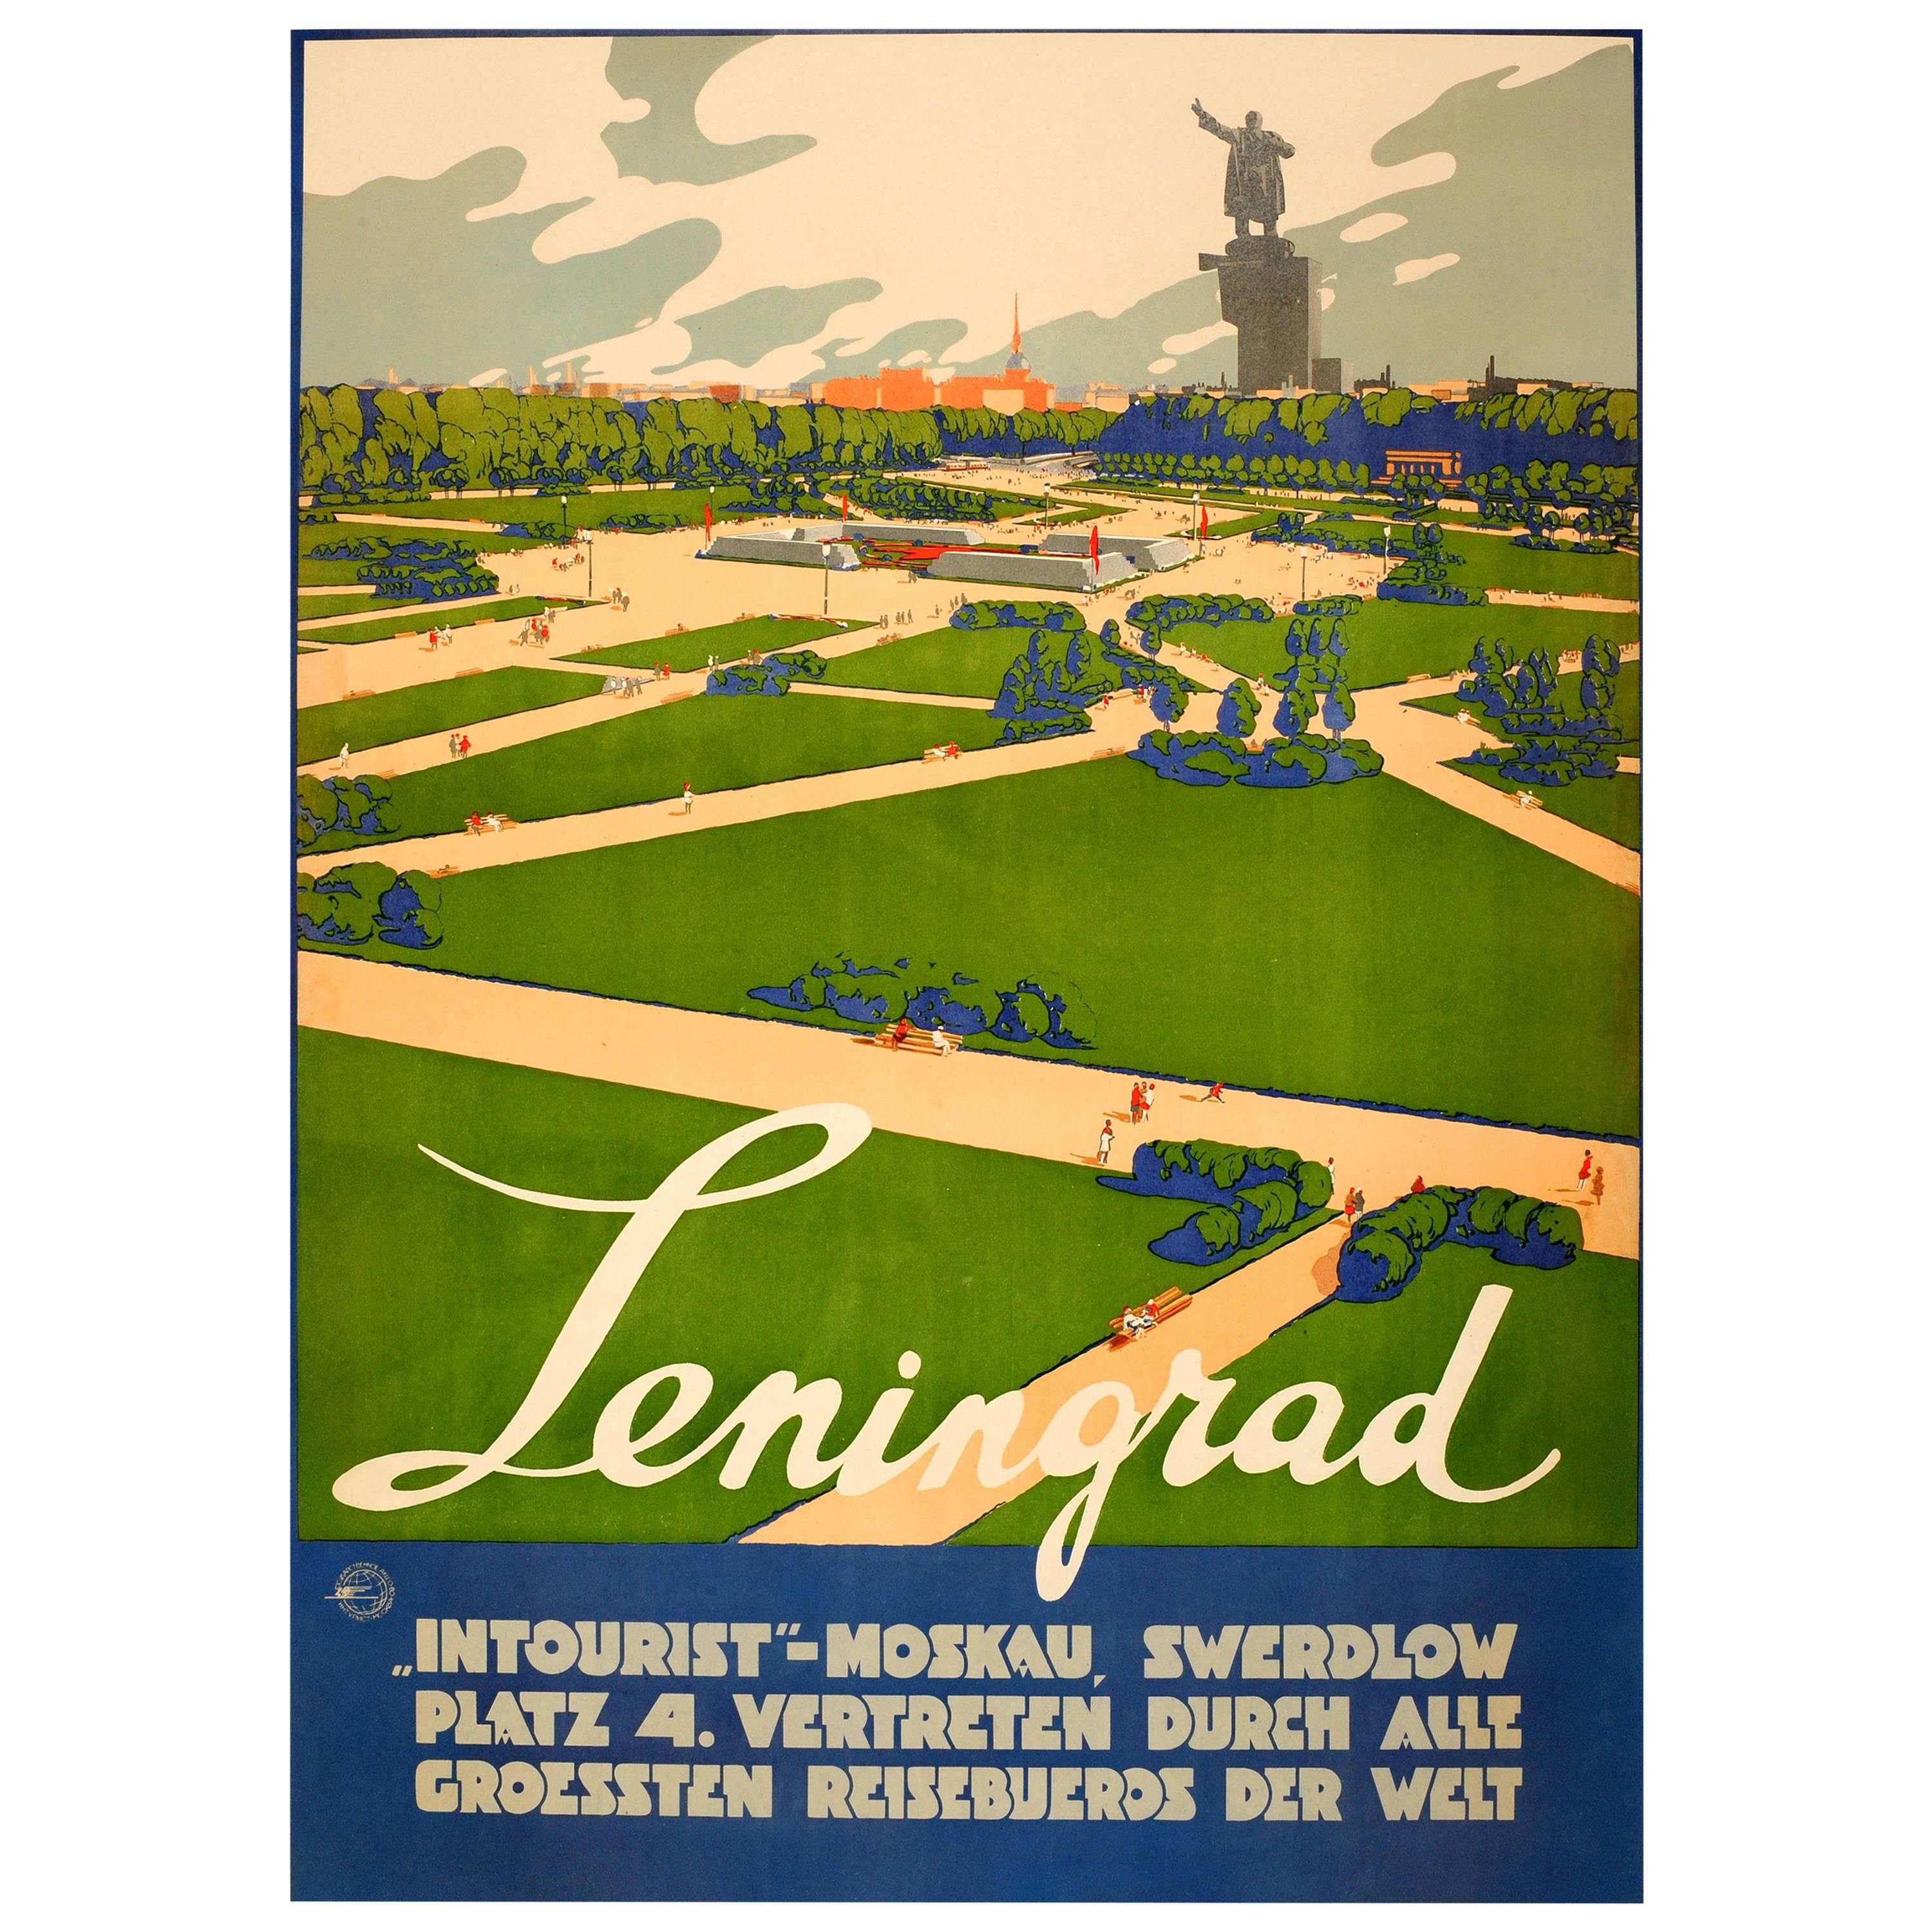 Original Soviet Intourist Travel Poster, “Leningrad ‘St Petersburg’”, Russia